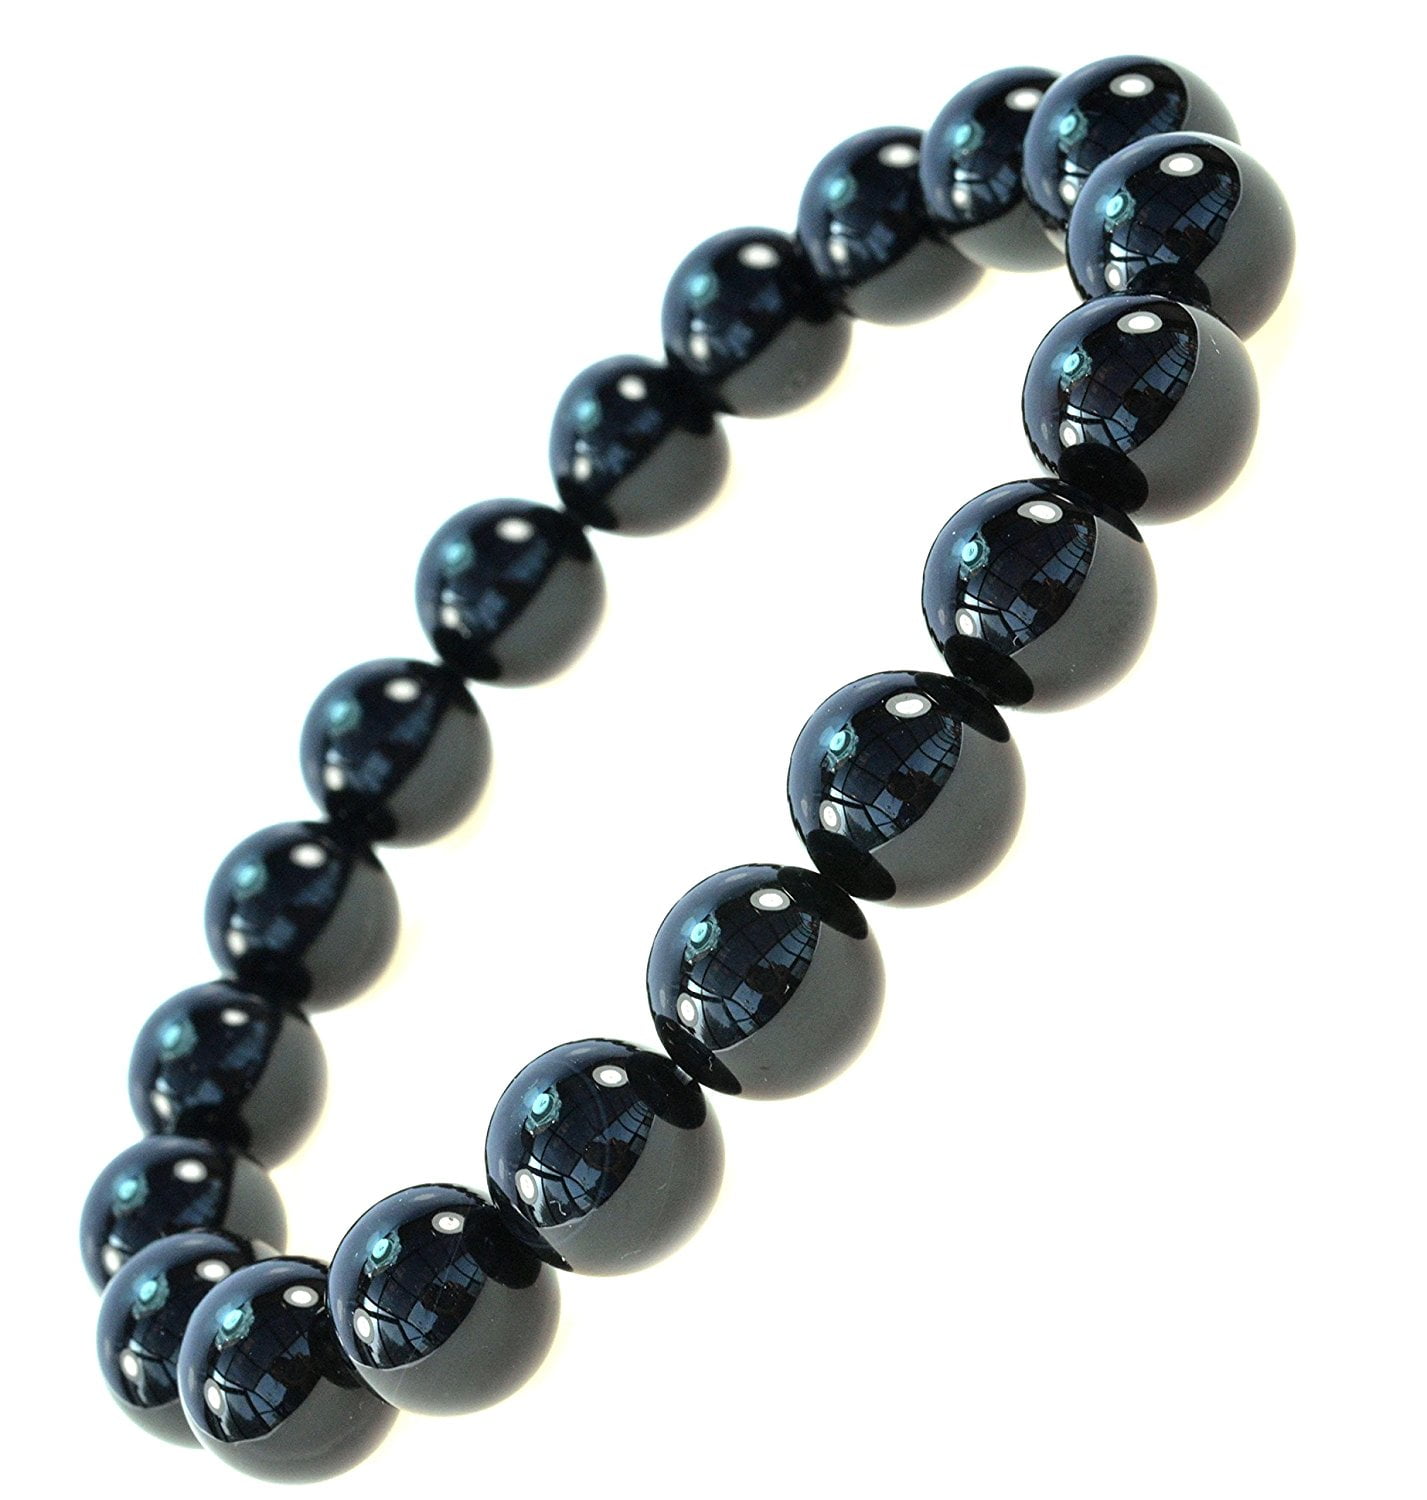 Black Tourmaline and Lapis Lazuli for Stress Relief – Rock My Zen